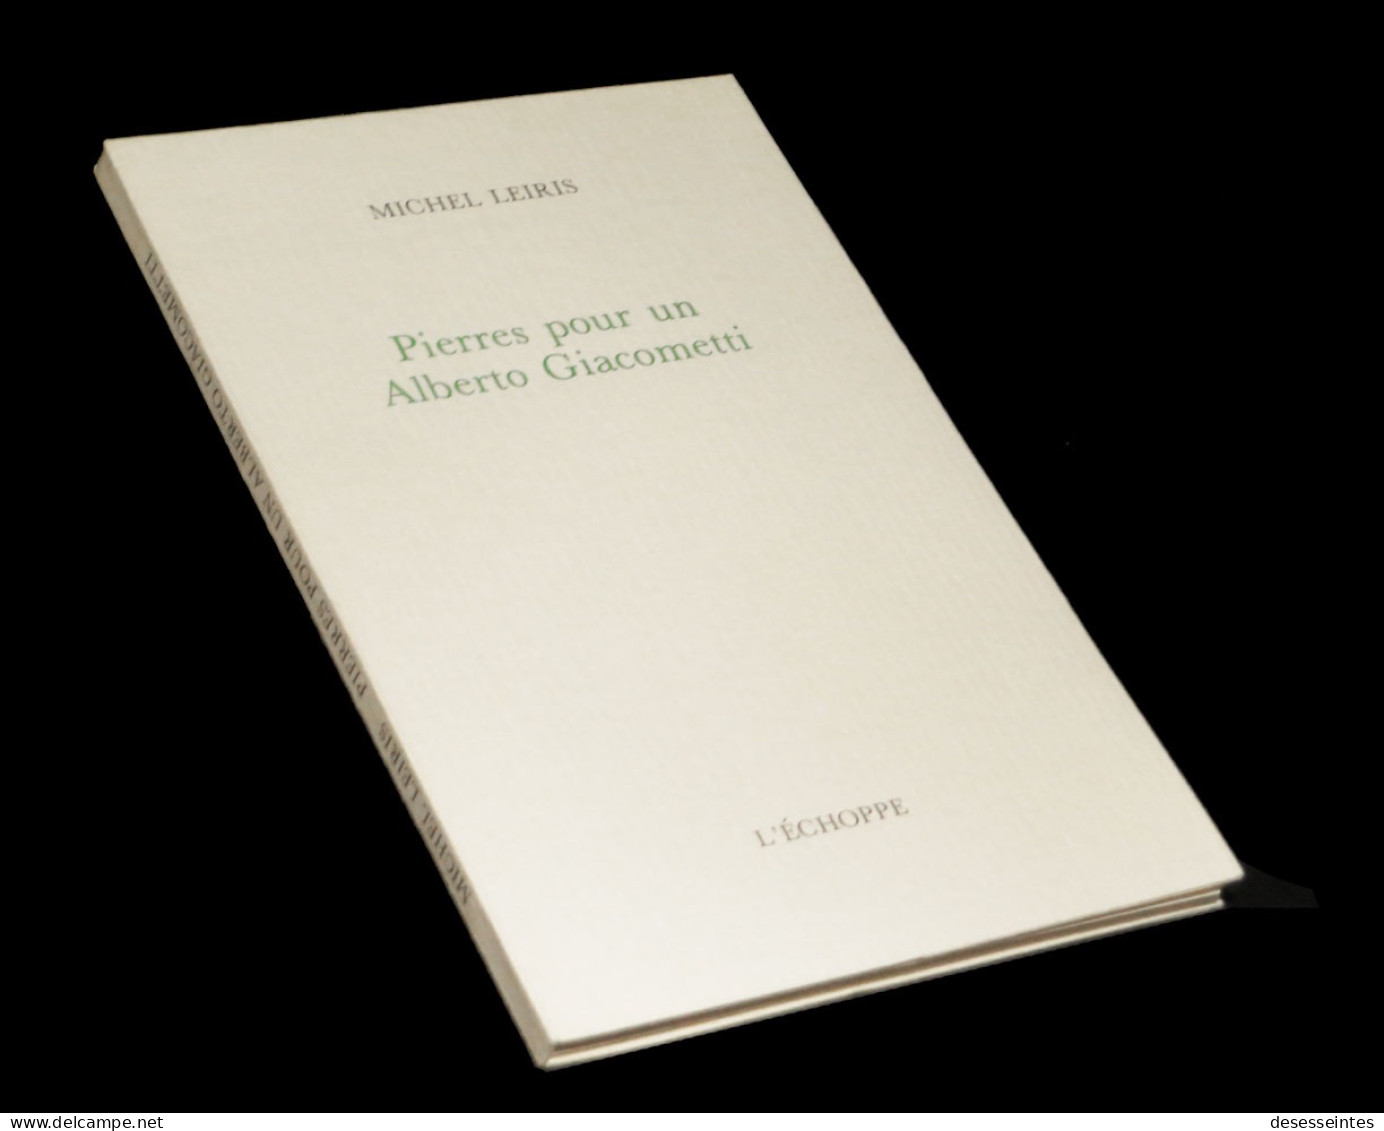 [L'ECHOPPE] LEIRIS (Michel) - Pierres Pour Un Alberto Giacometti. EO. - Arte